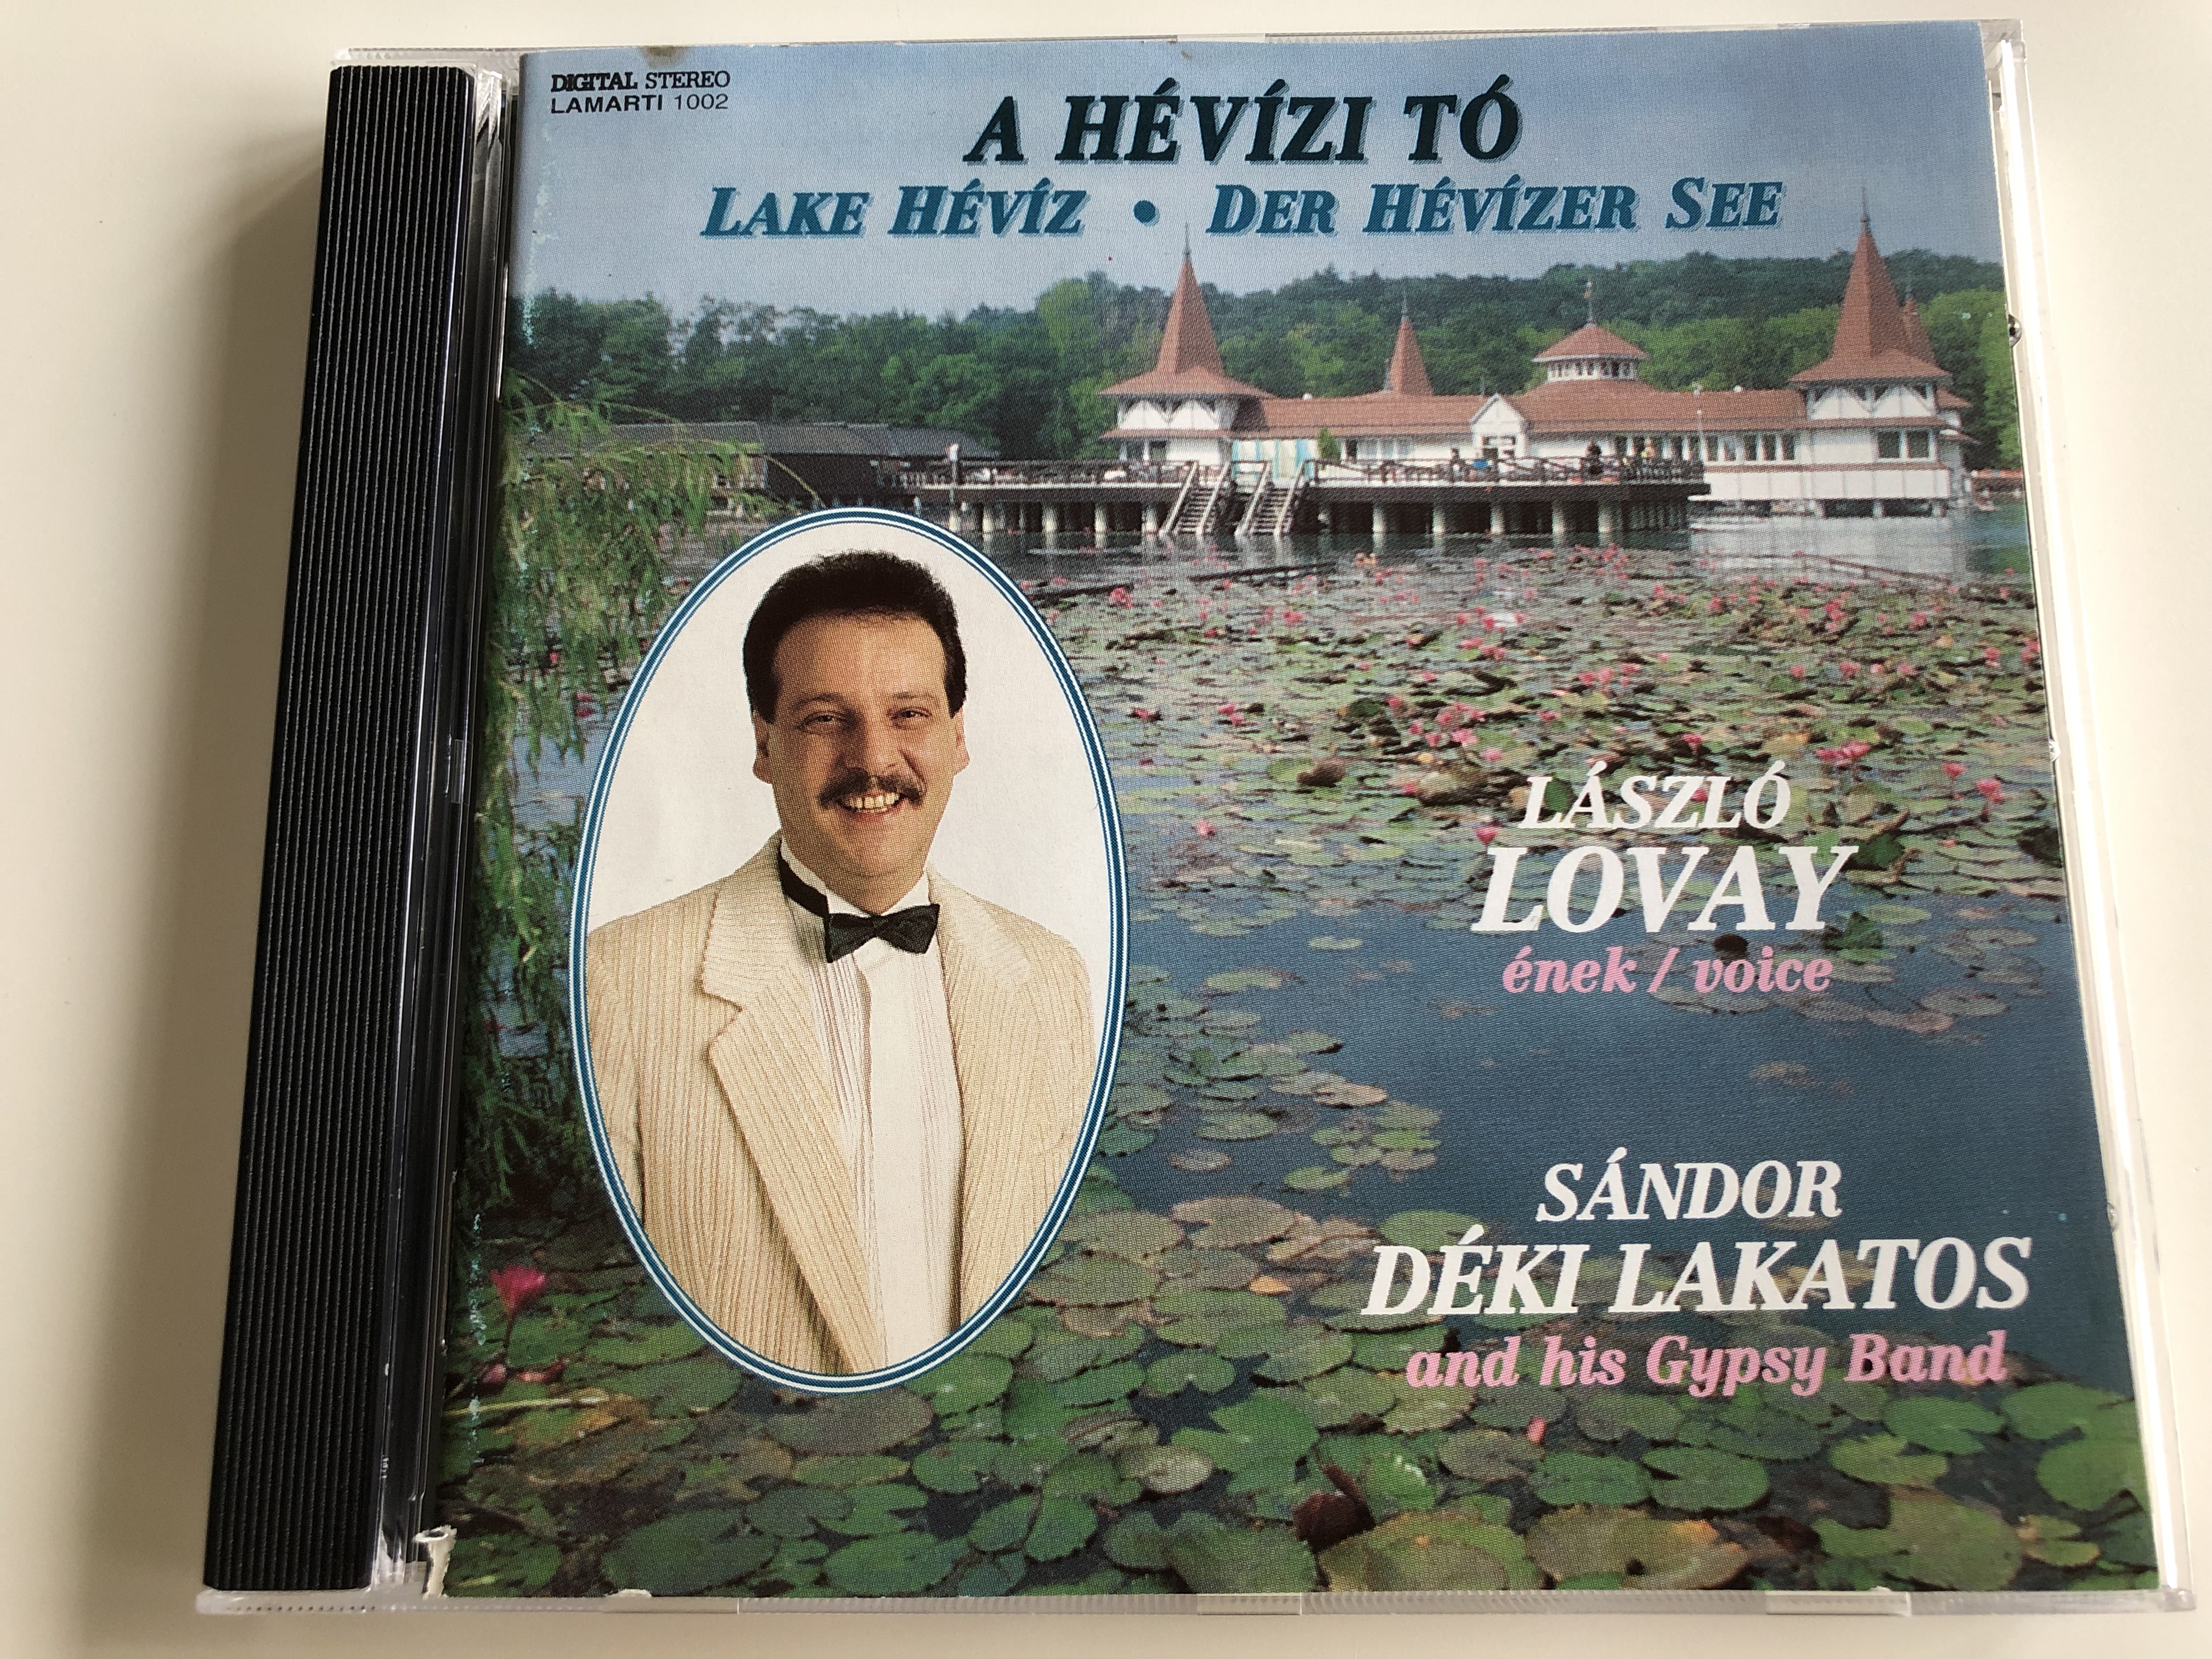 a-h-v-zi-t-lake-h-v-z-der-h-v-zer-see-l-szl-lovay-vocals-s-ndor-d-ki-lakatos-and-his-gypsy-band-audio-cd-1995-1002-digital-stereo-1-.jpg